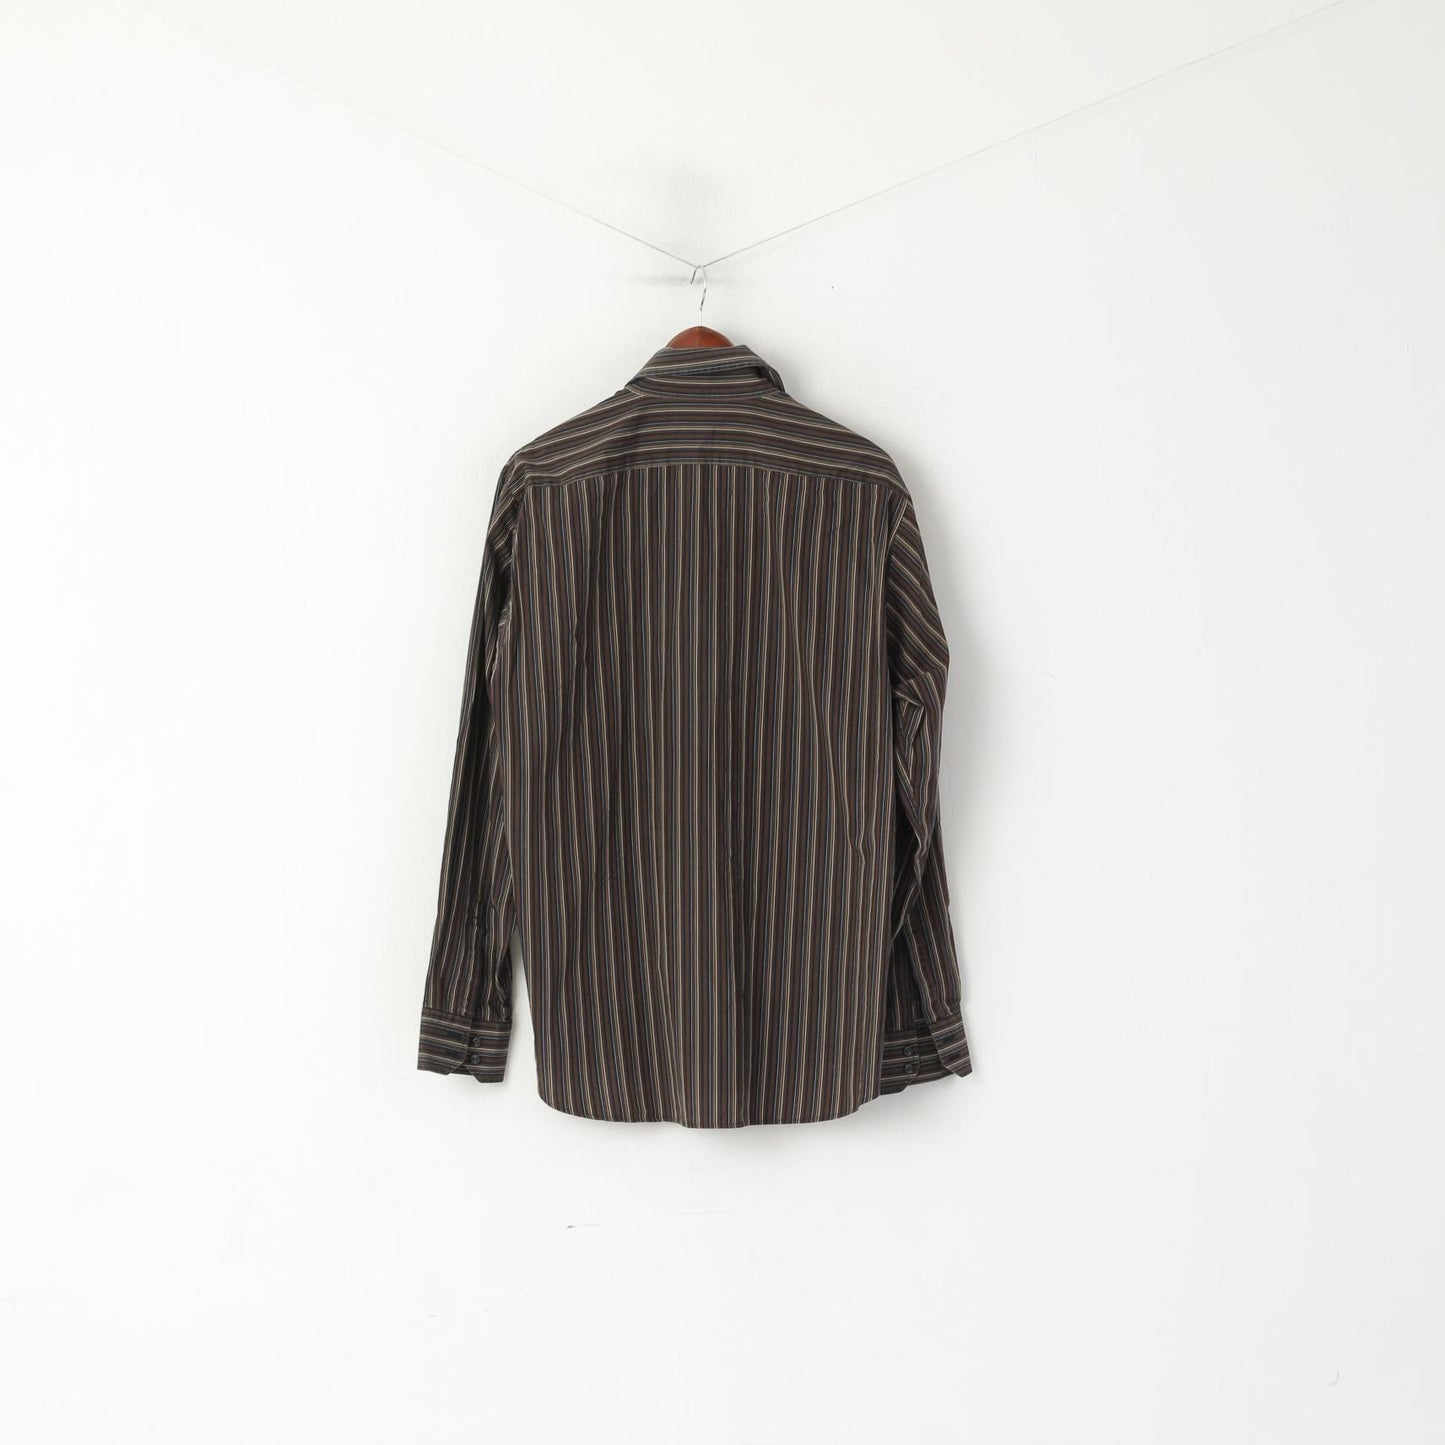 Hugo Boss Men 17 43 XL Casual Shirt Brown Cotton Striped Long Sleeved Top